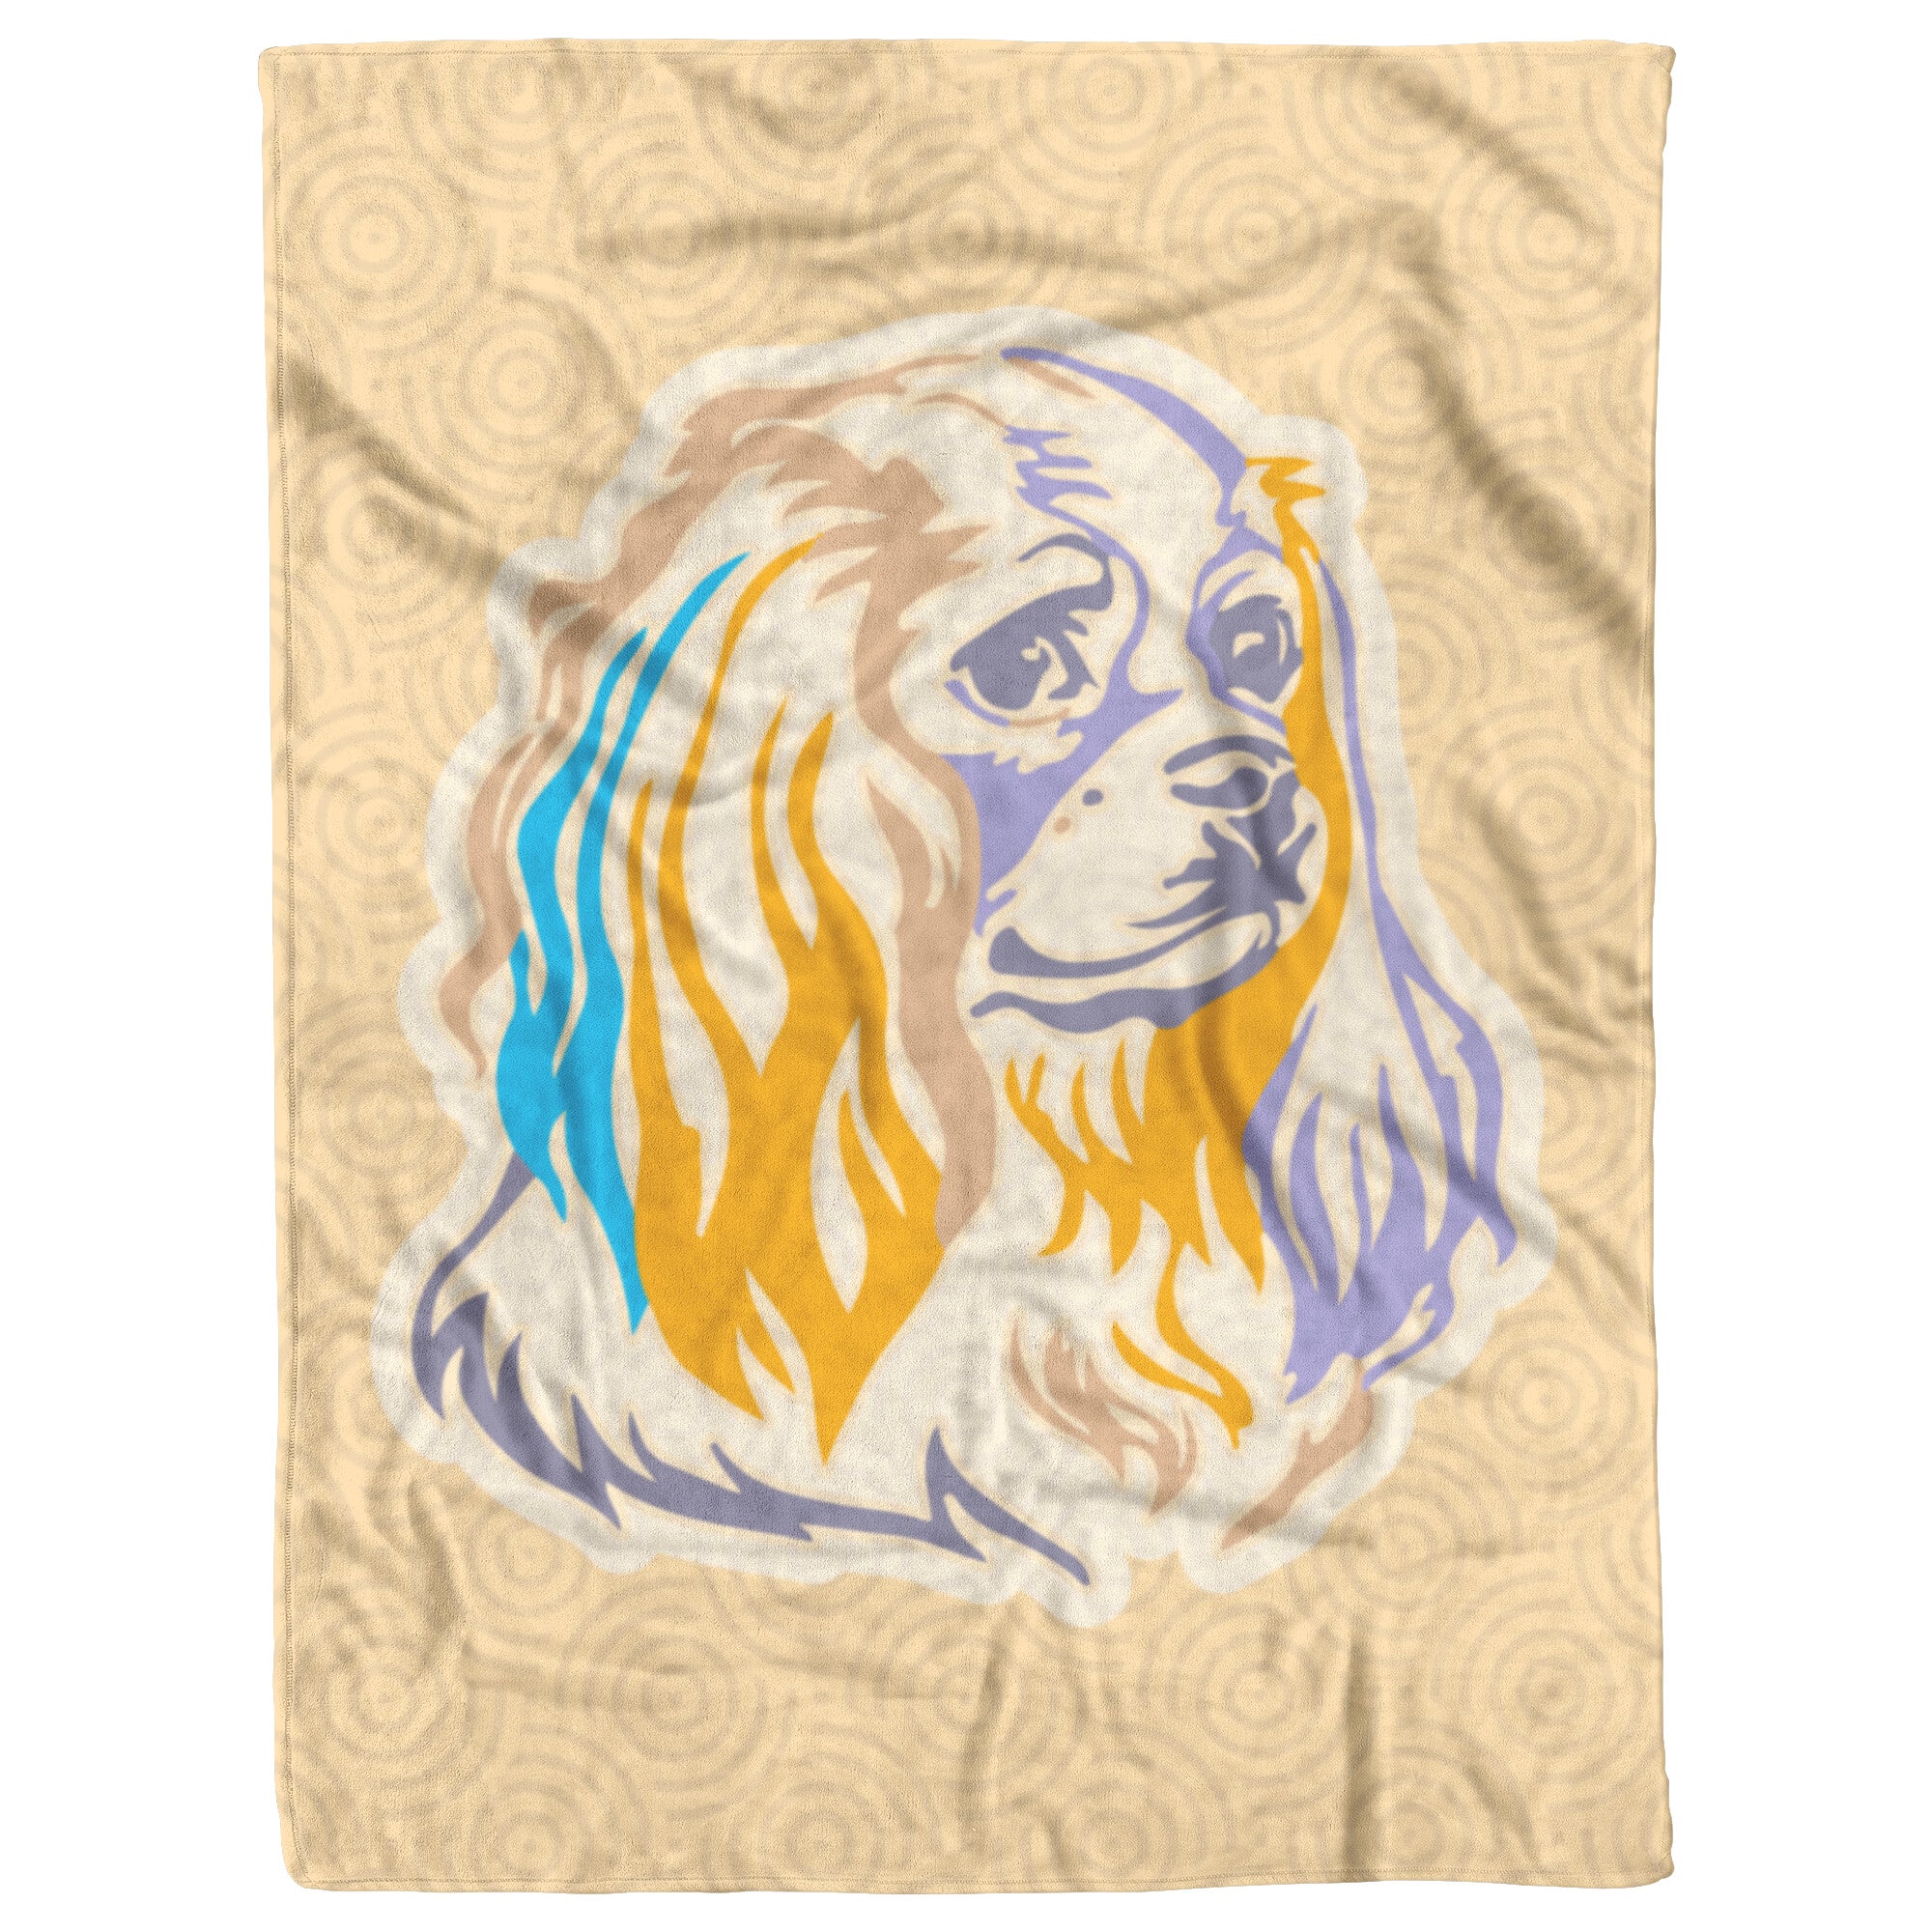 Puppy House - Fleece Blanket